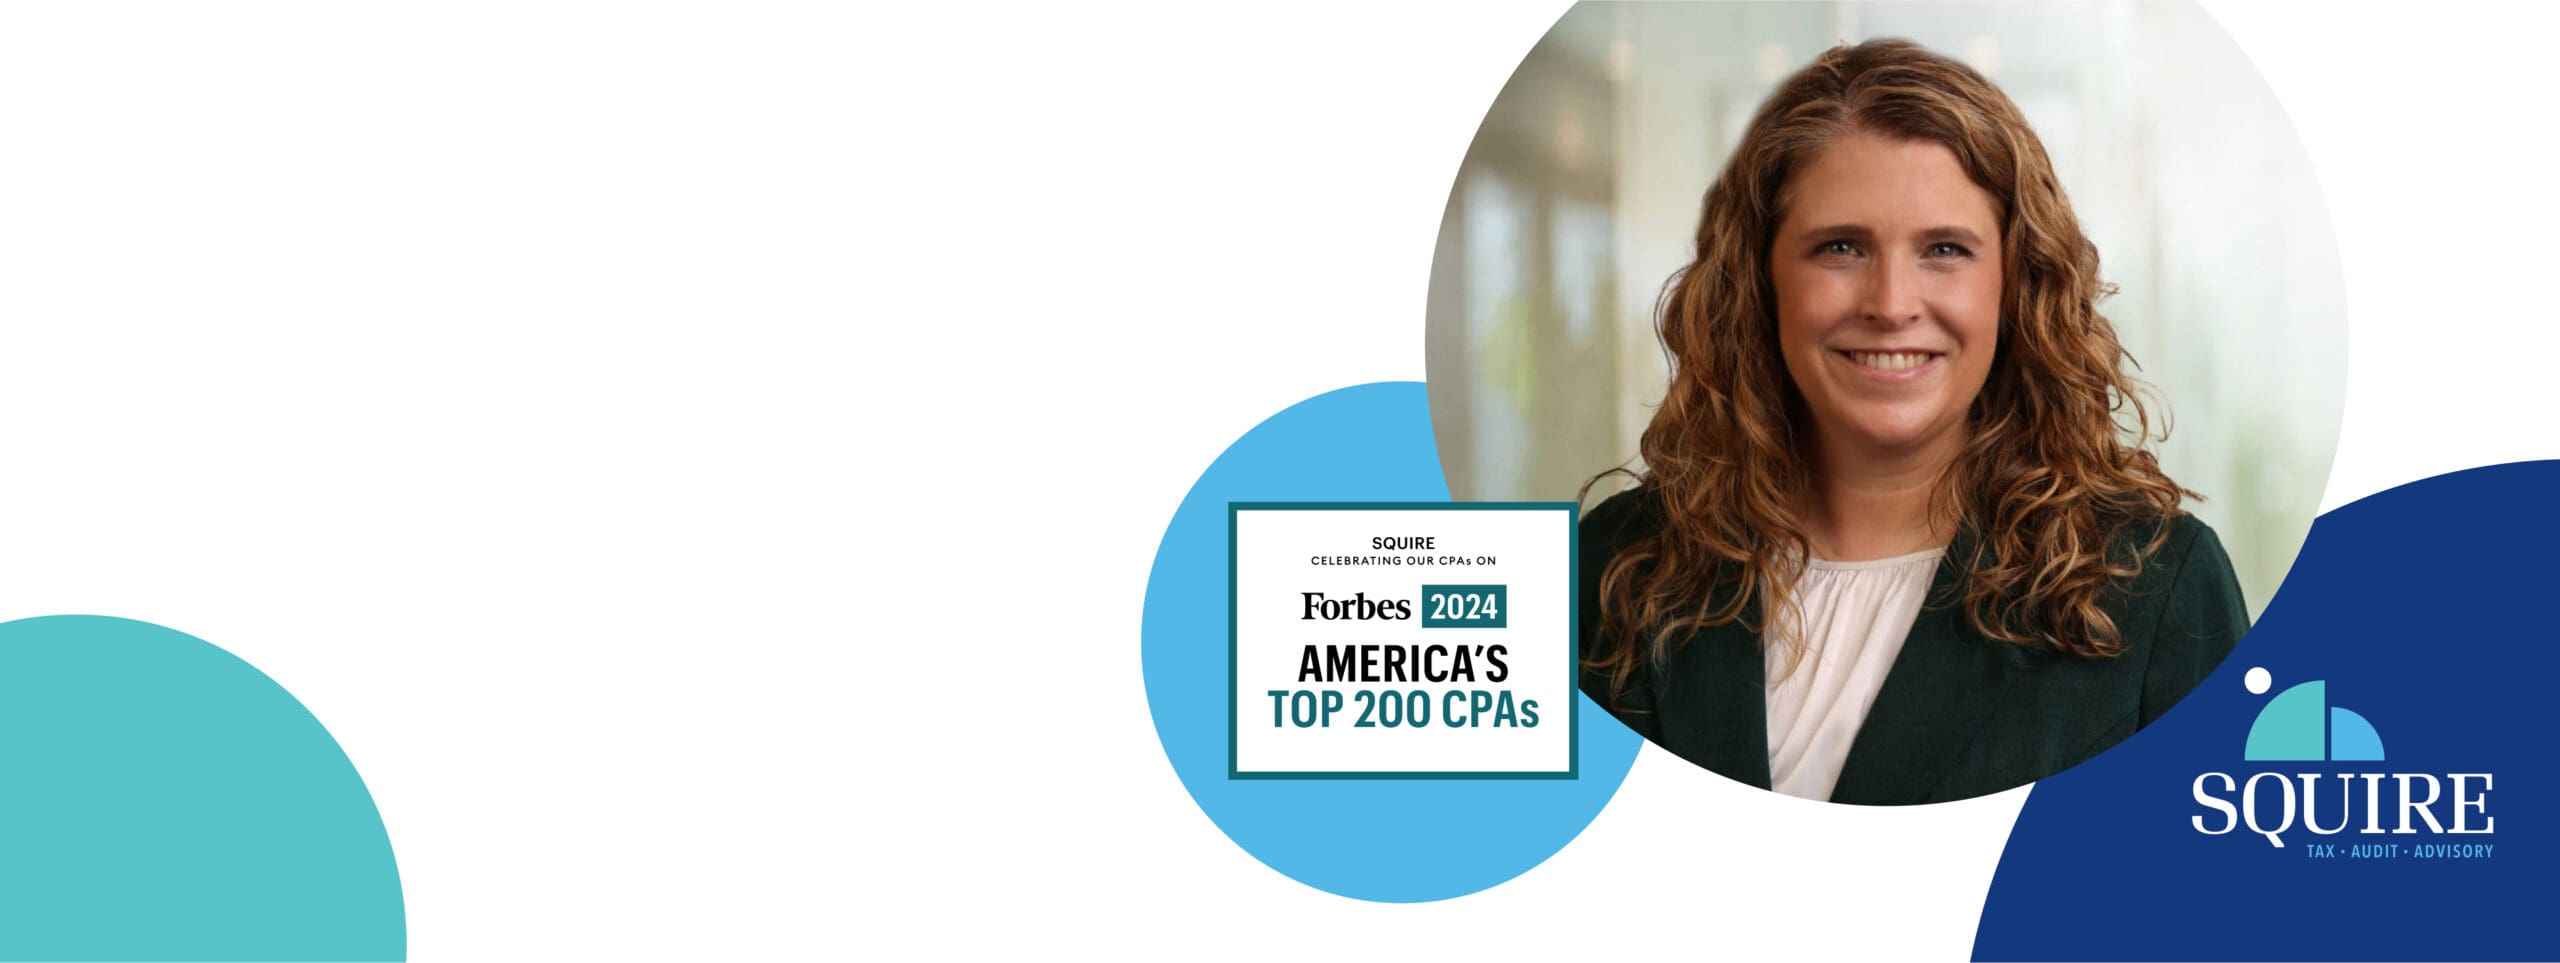 Americas Top 200 CPAs